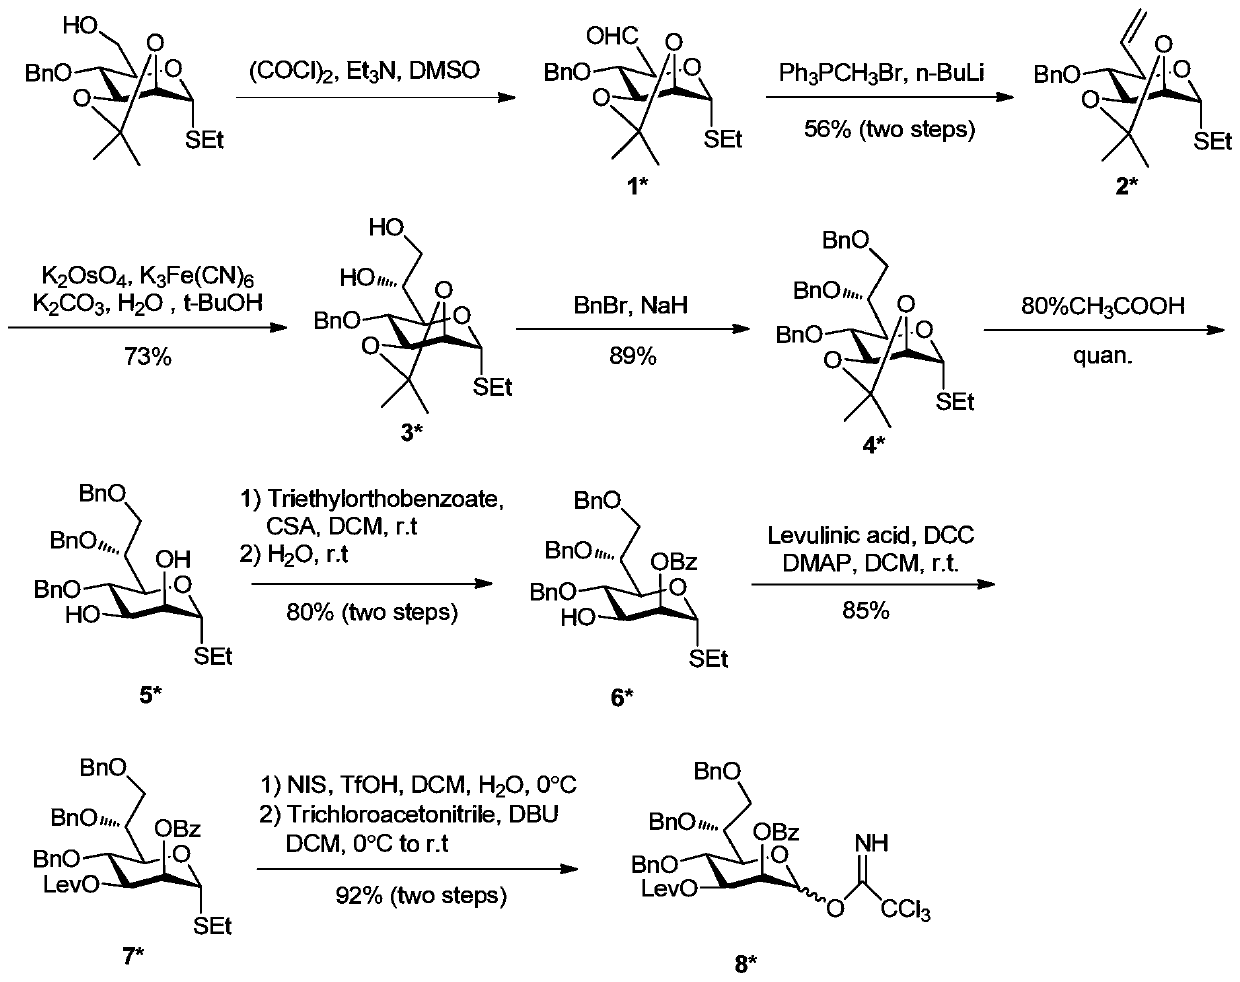 Synthesizing method for helicobacter pylori O:6 serotype O-antigen sugar chains